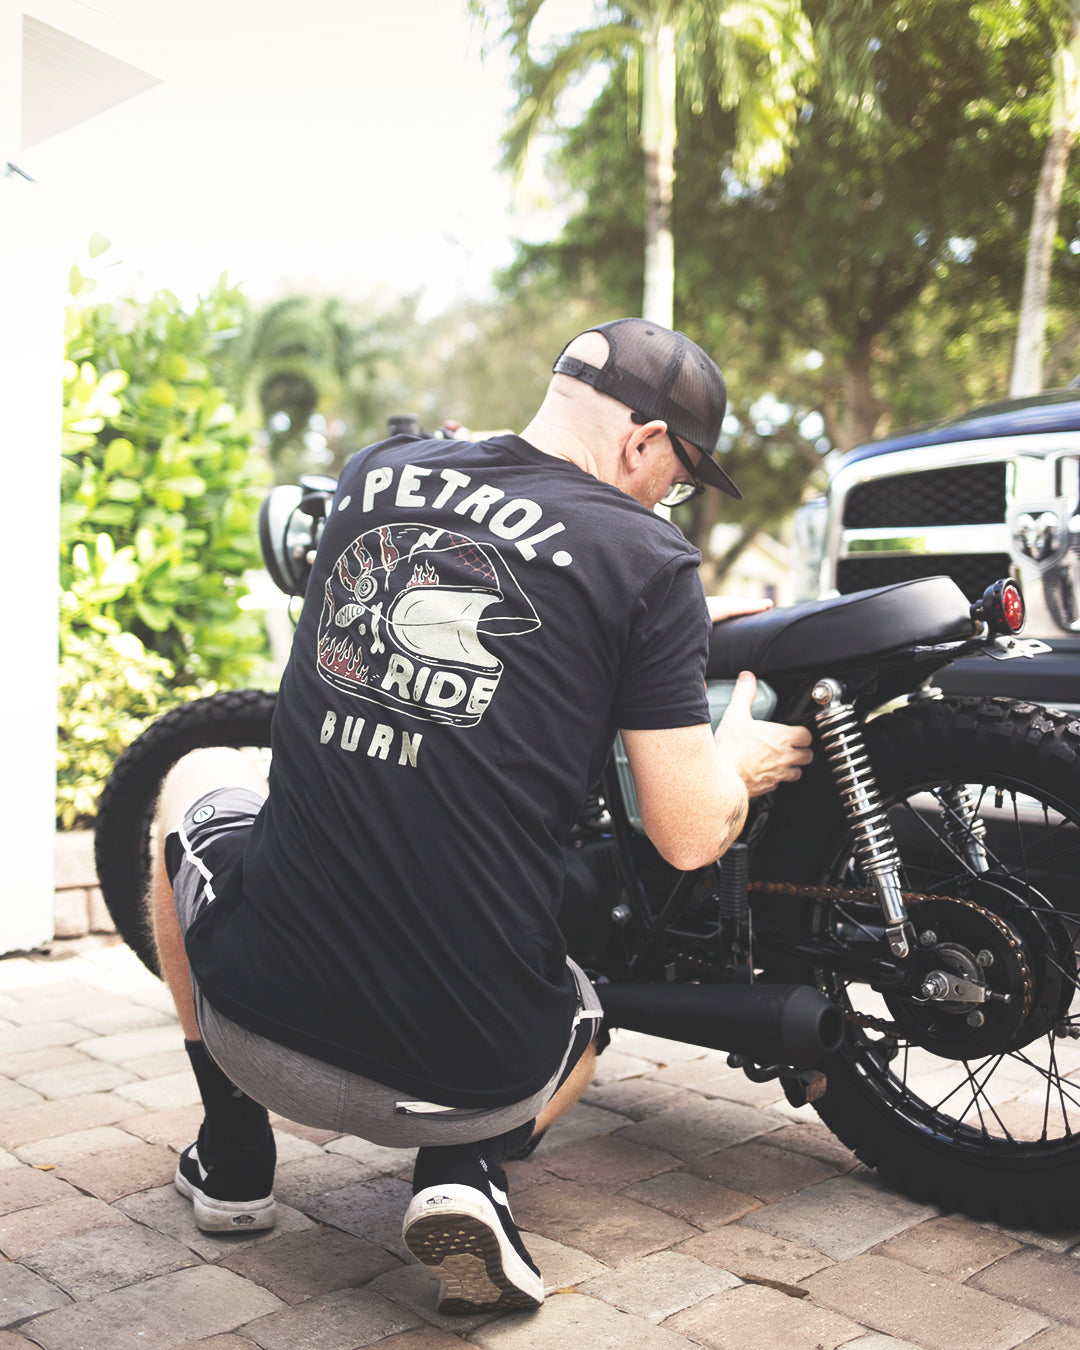 petrol burn clothing motorcycle full faced helmet t-shirt